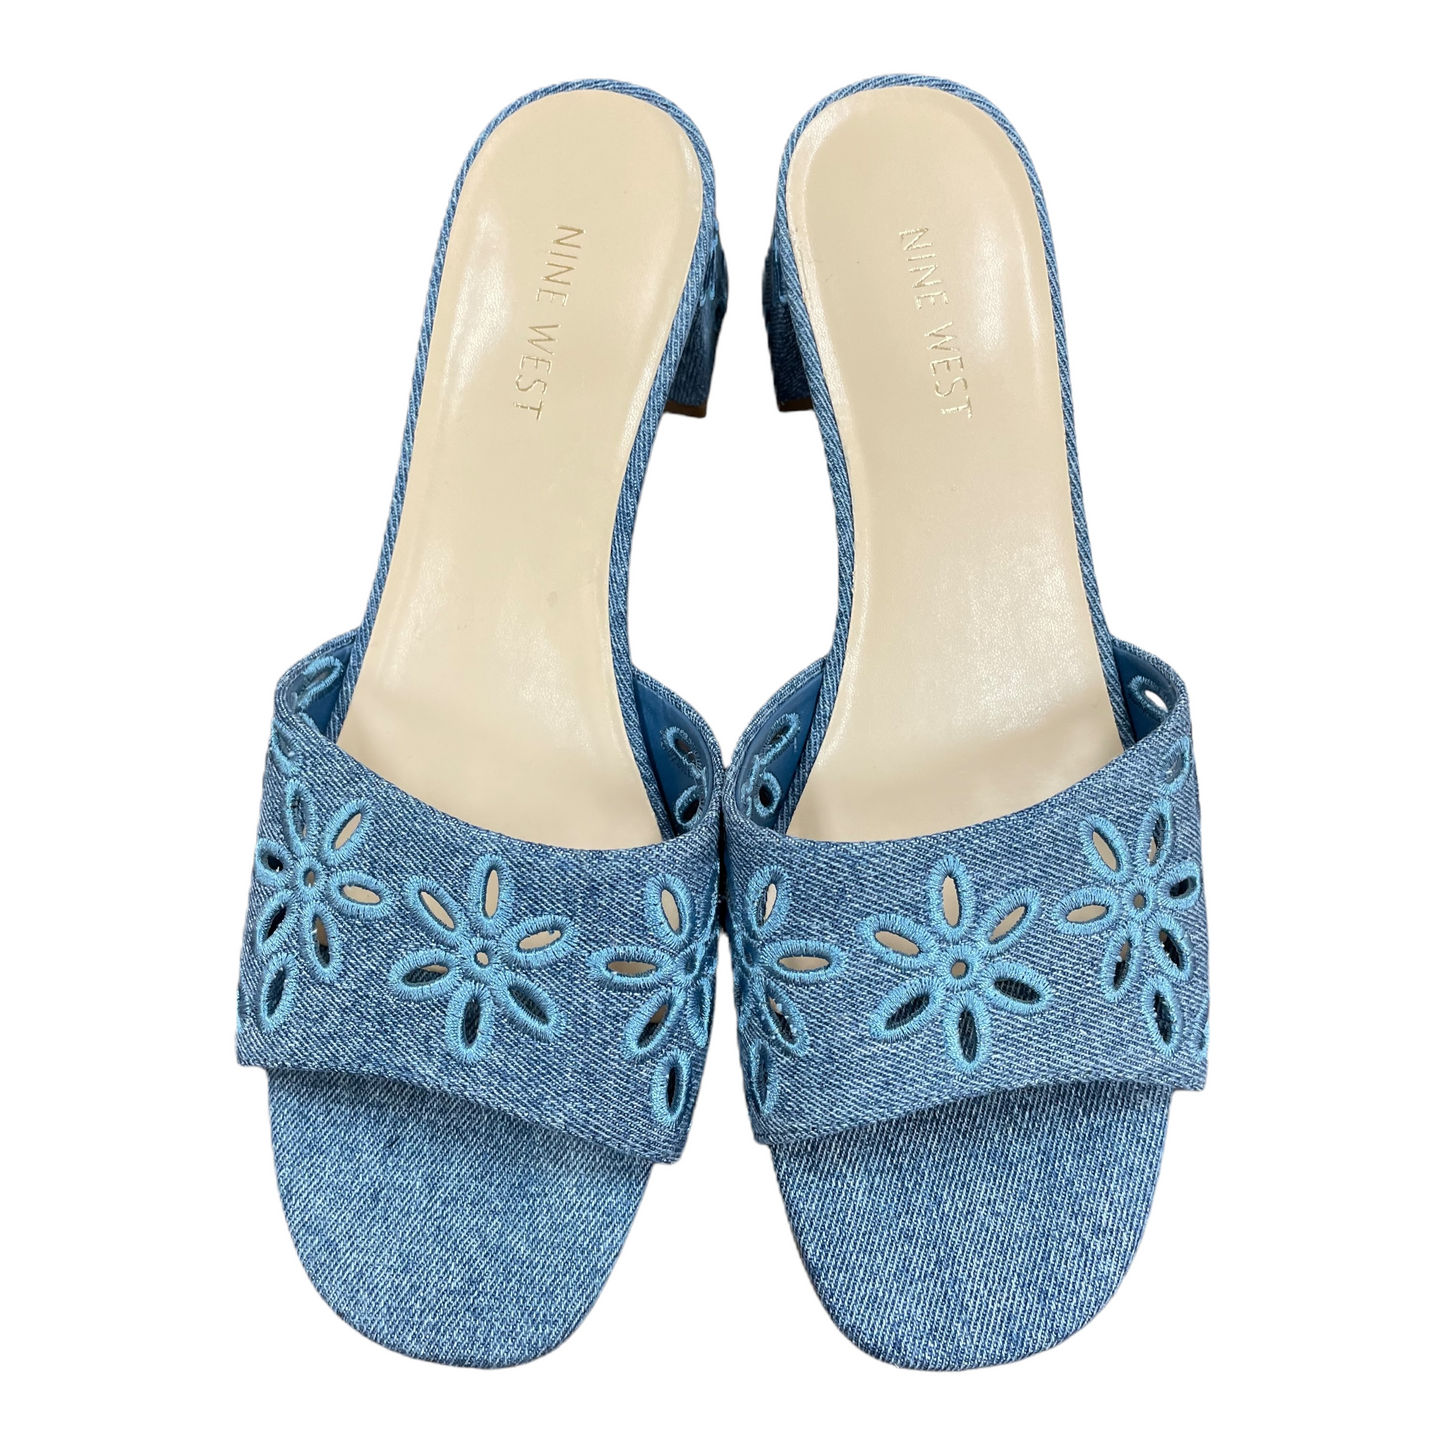 Blue Sandals Heels Block By Nine West, Size: 9